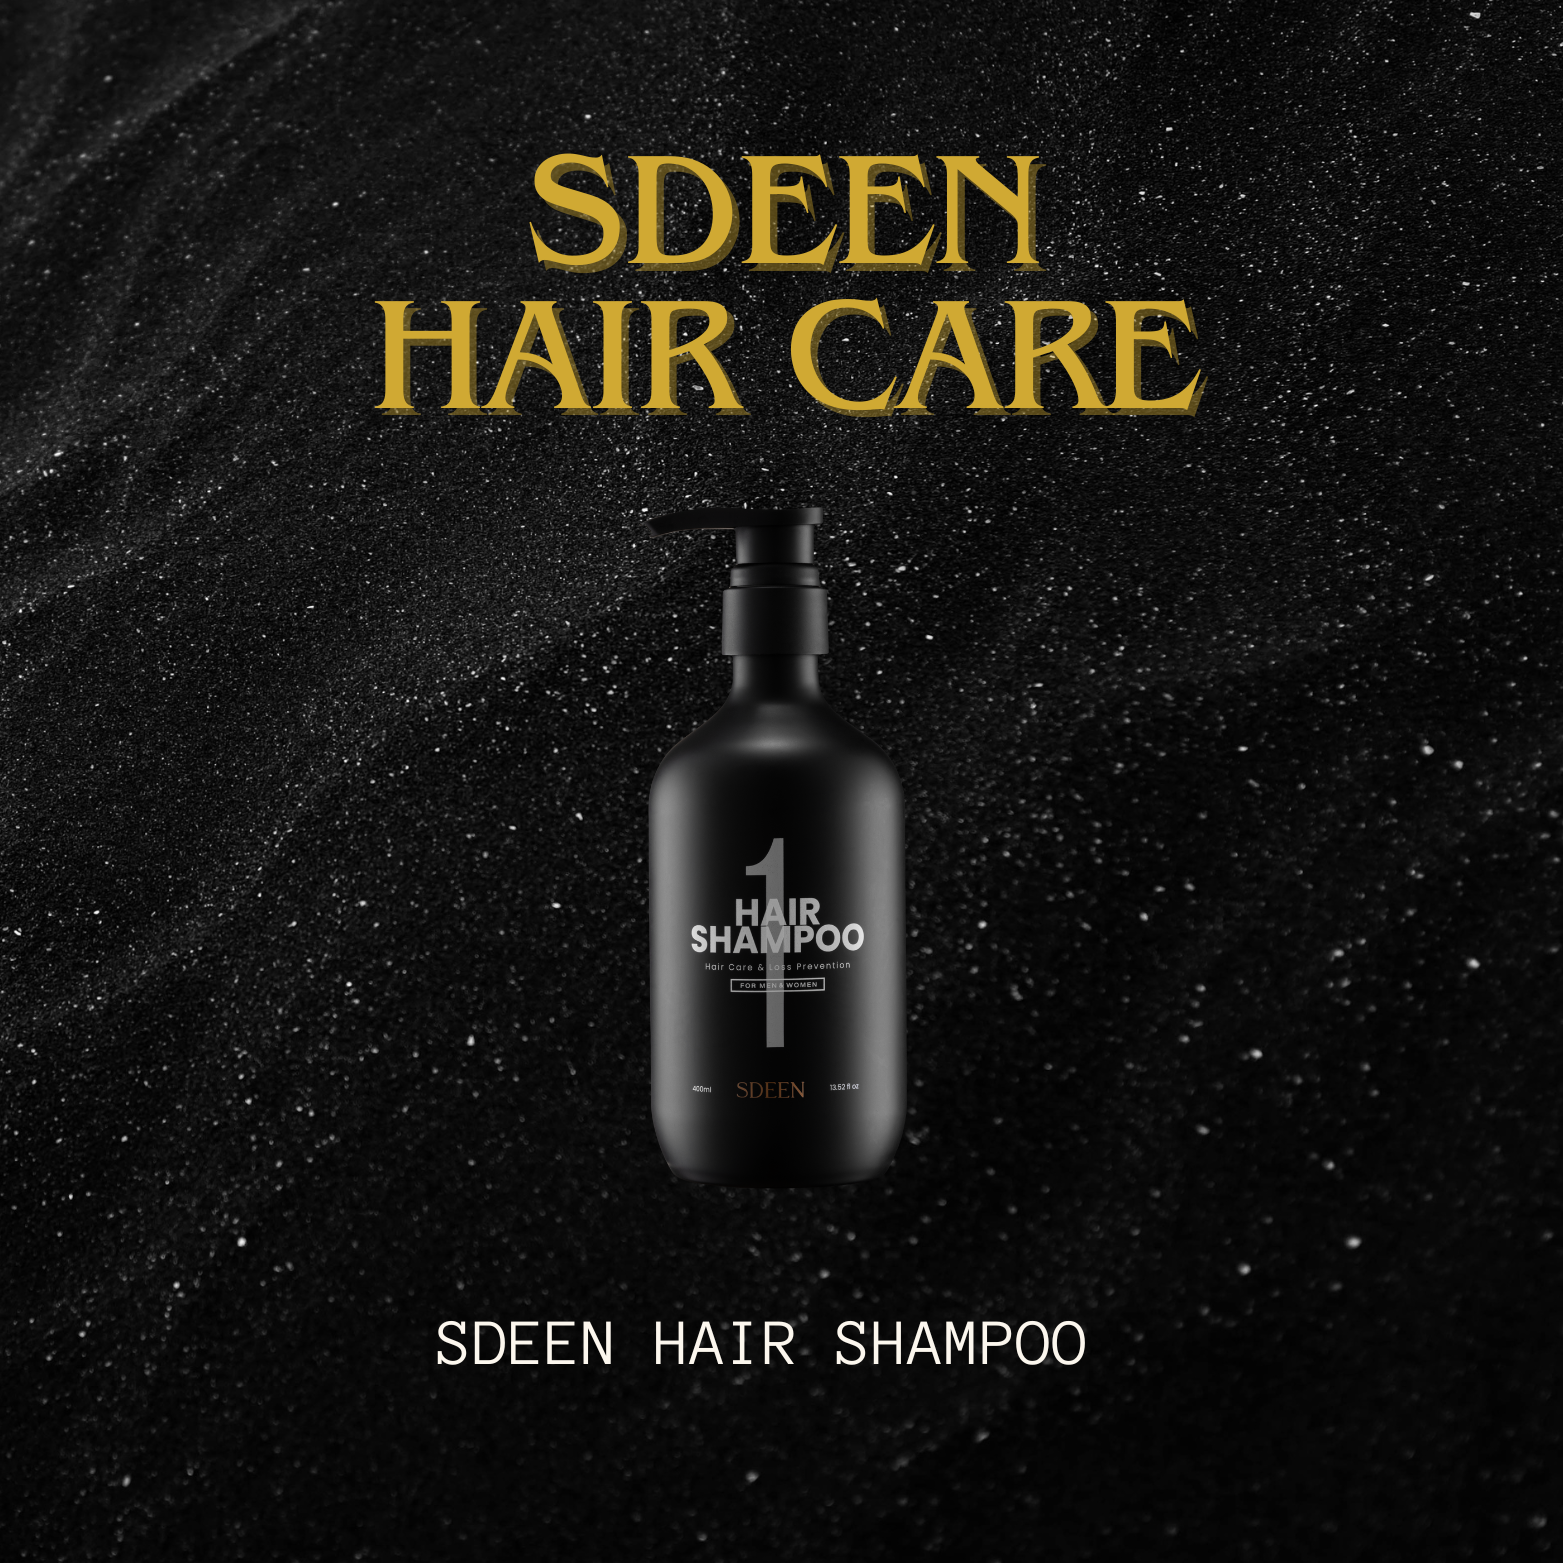 sdeen hair care (2)